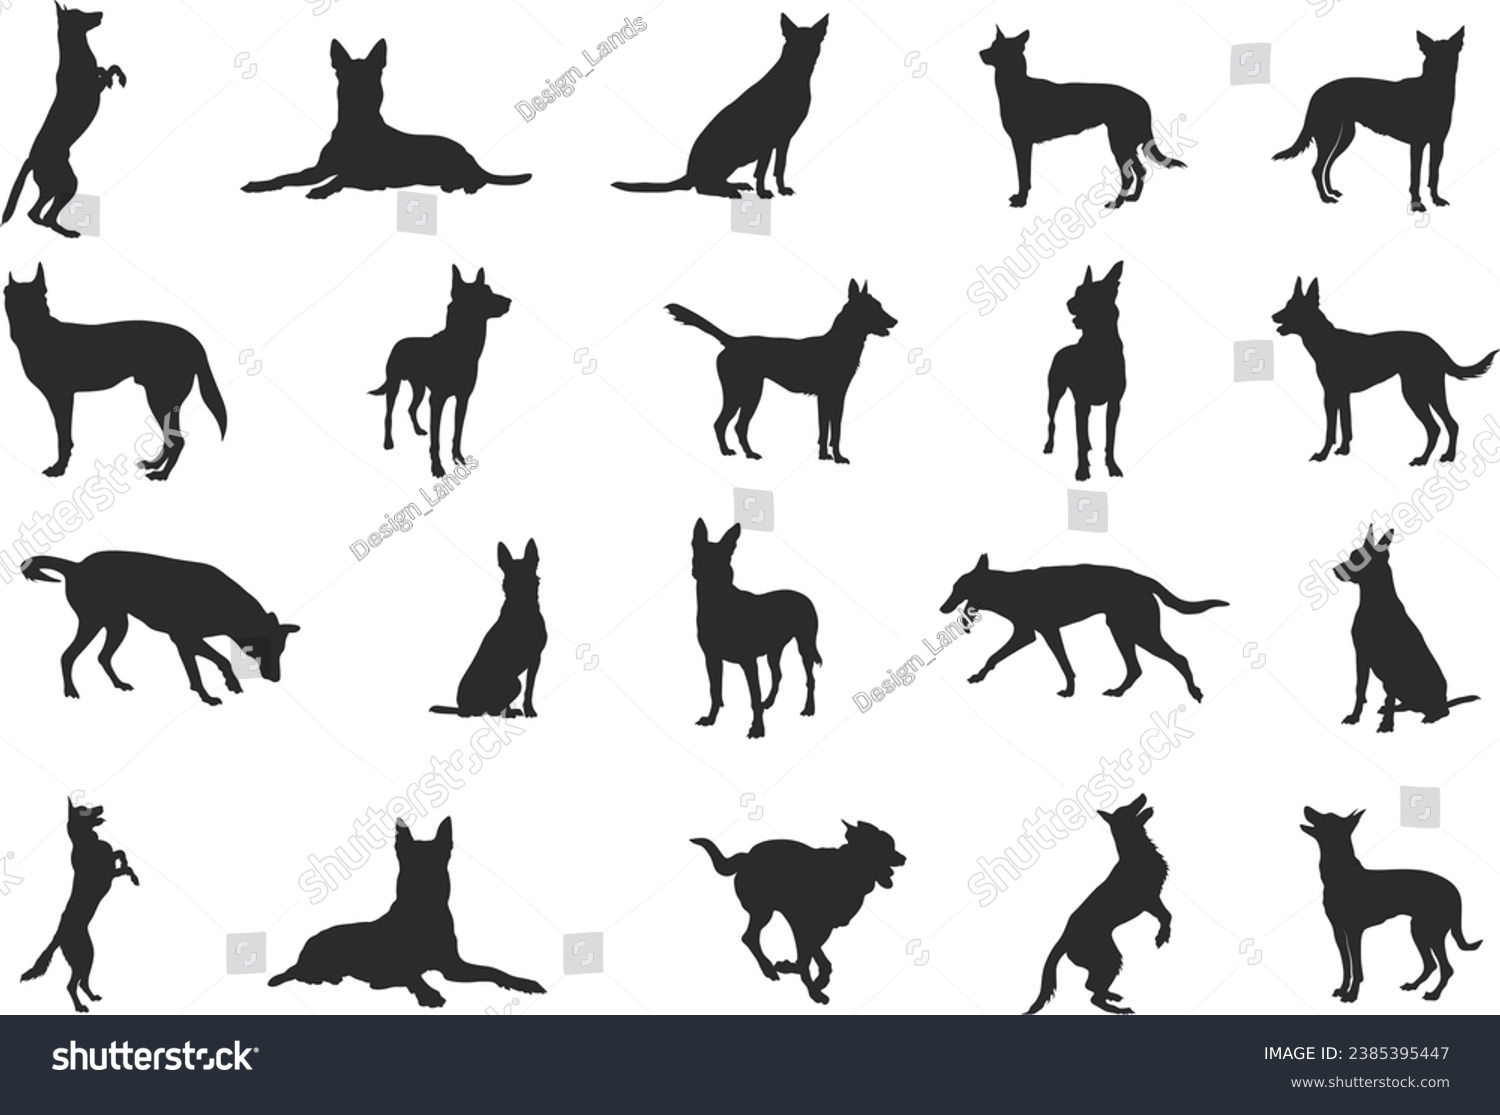 SVG of Belgian malinois silhouette, Belgian malinois dog silhouettes, Dog silhouettes, Dog icon, Belgian malinois clipart, Dog vector illustration. svg